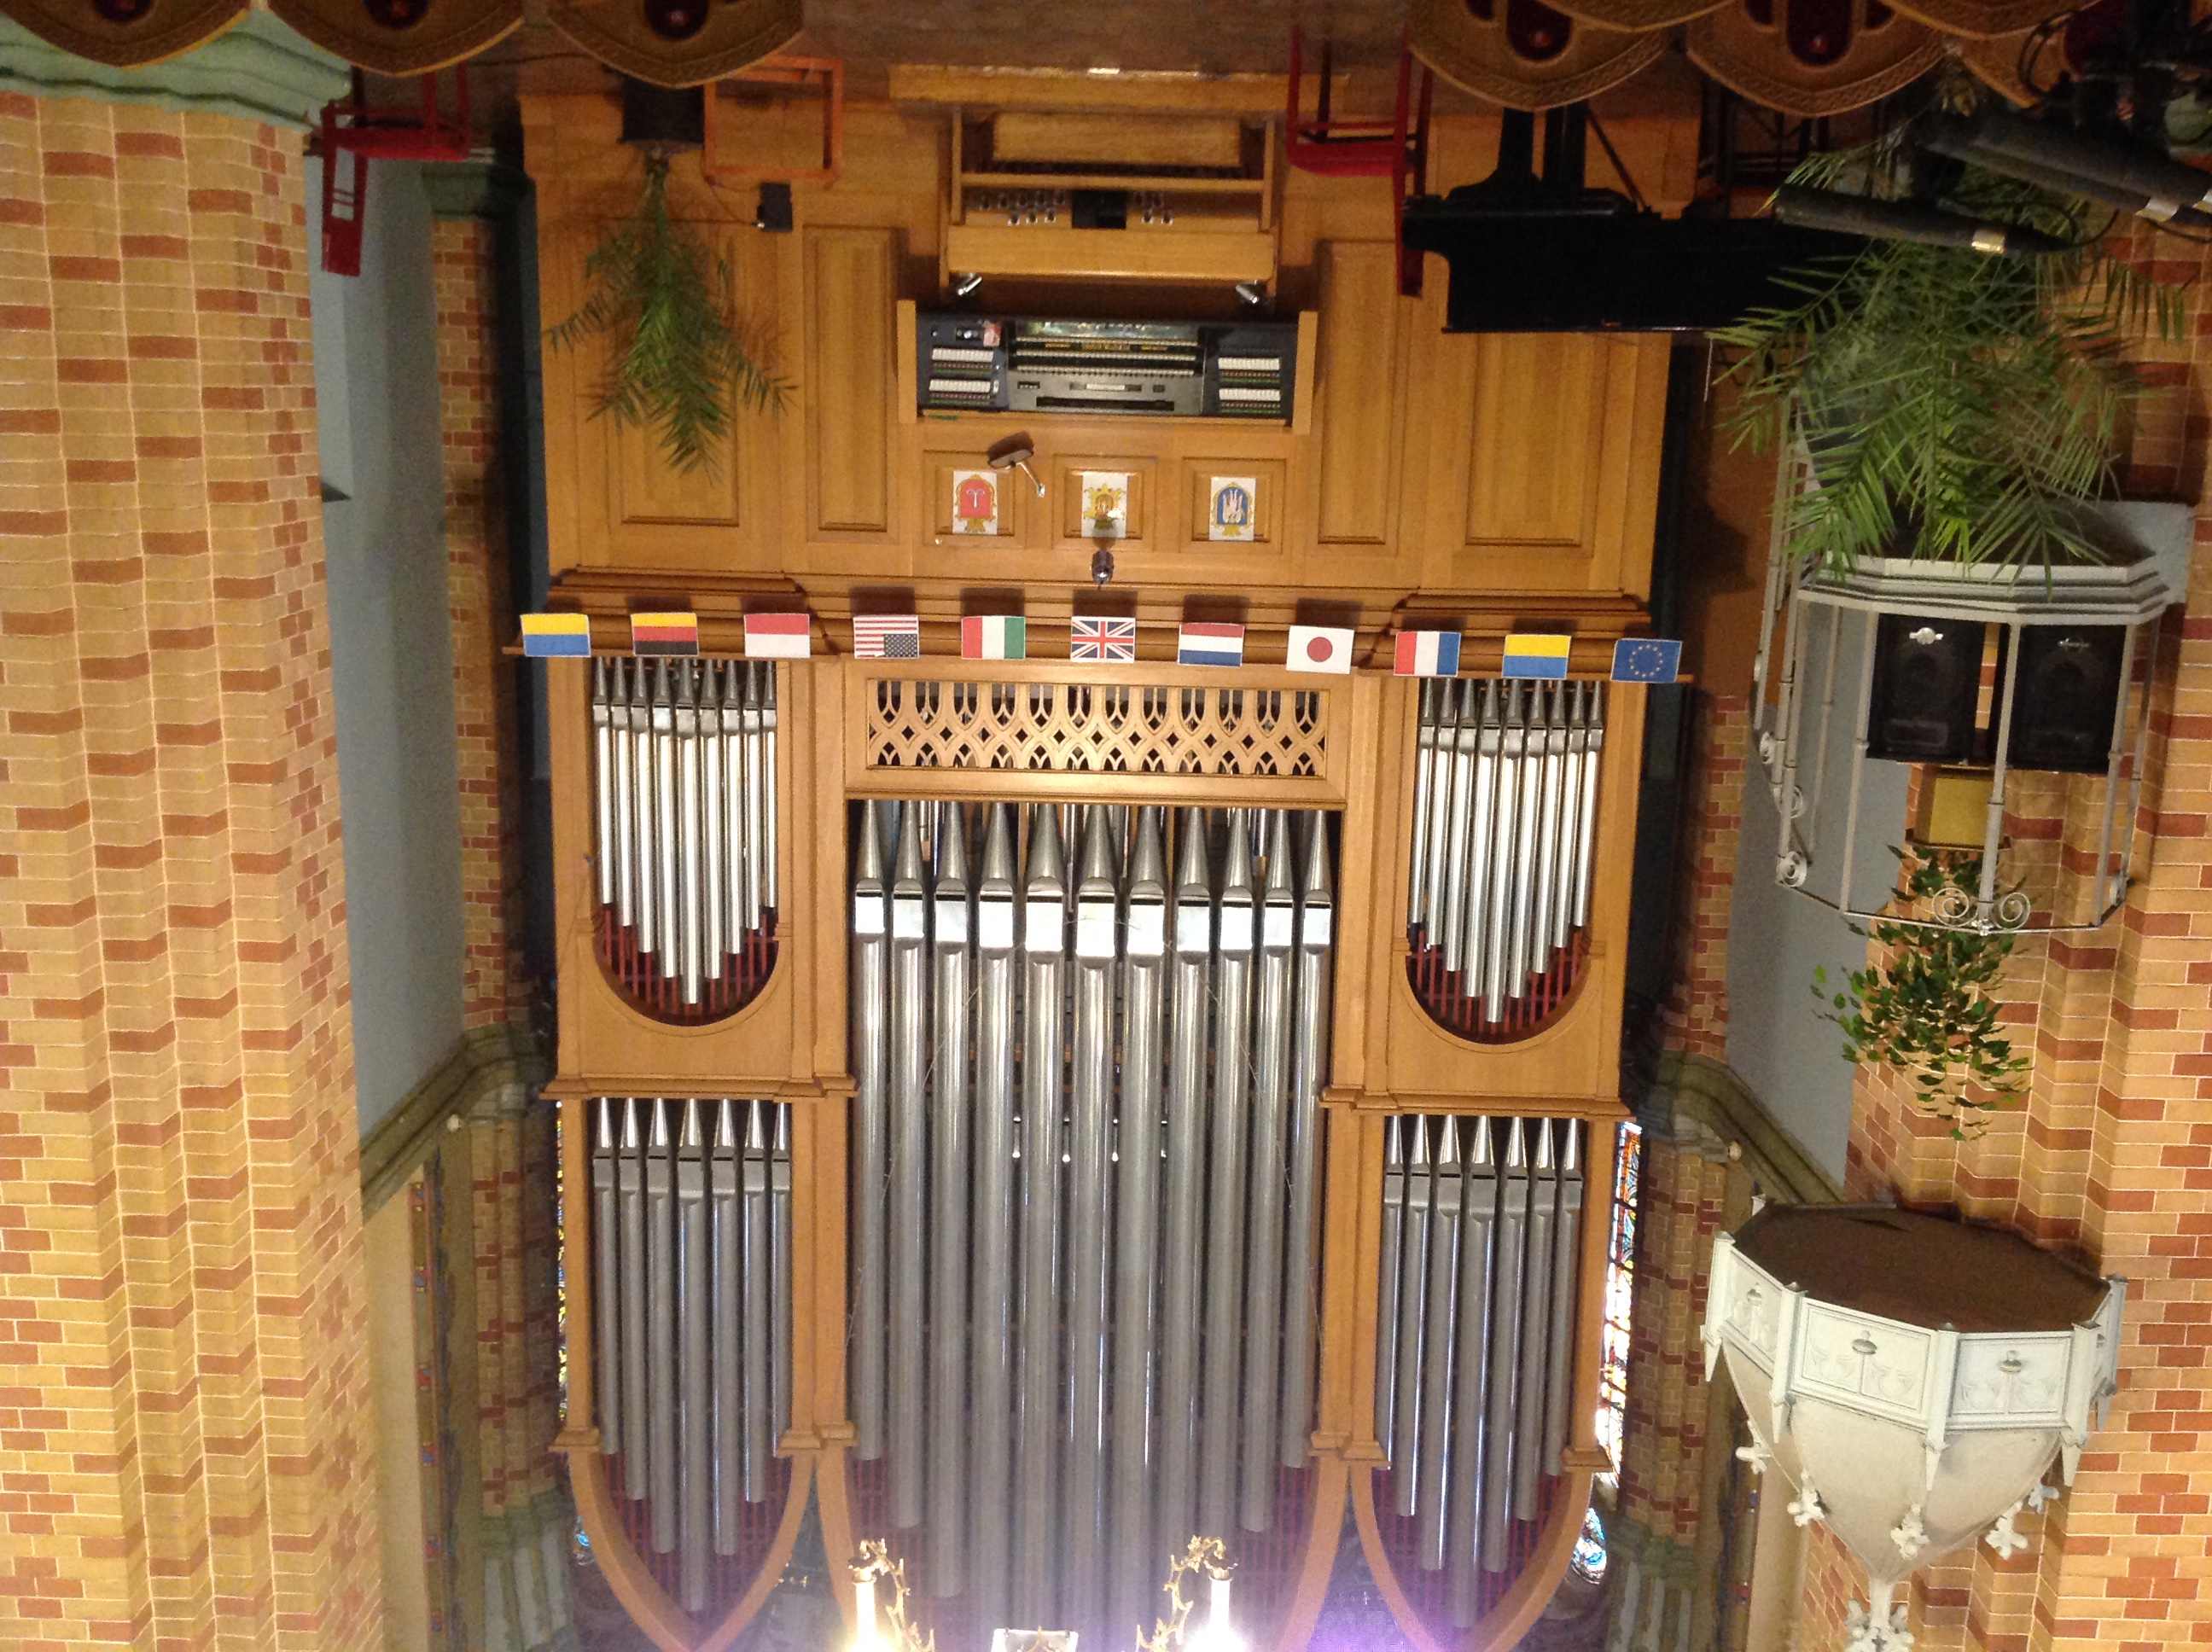 A Ukrainian concert organ